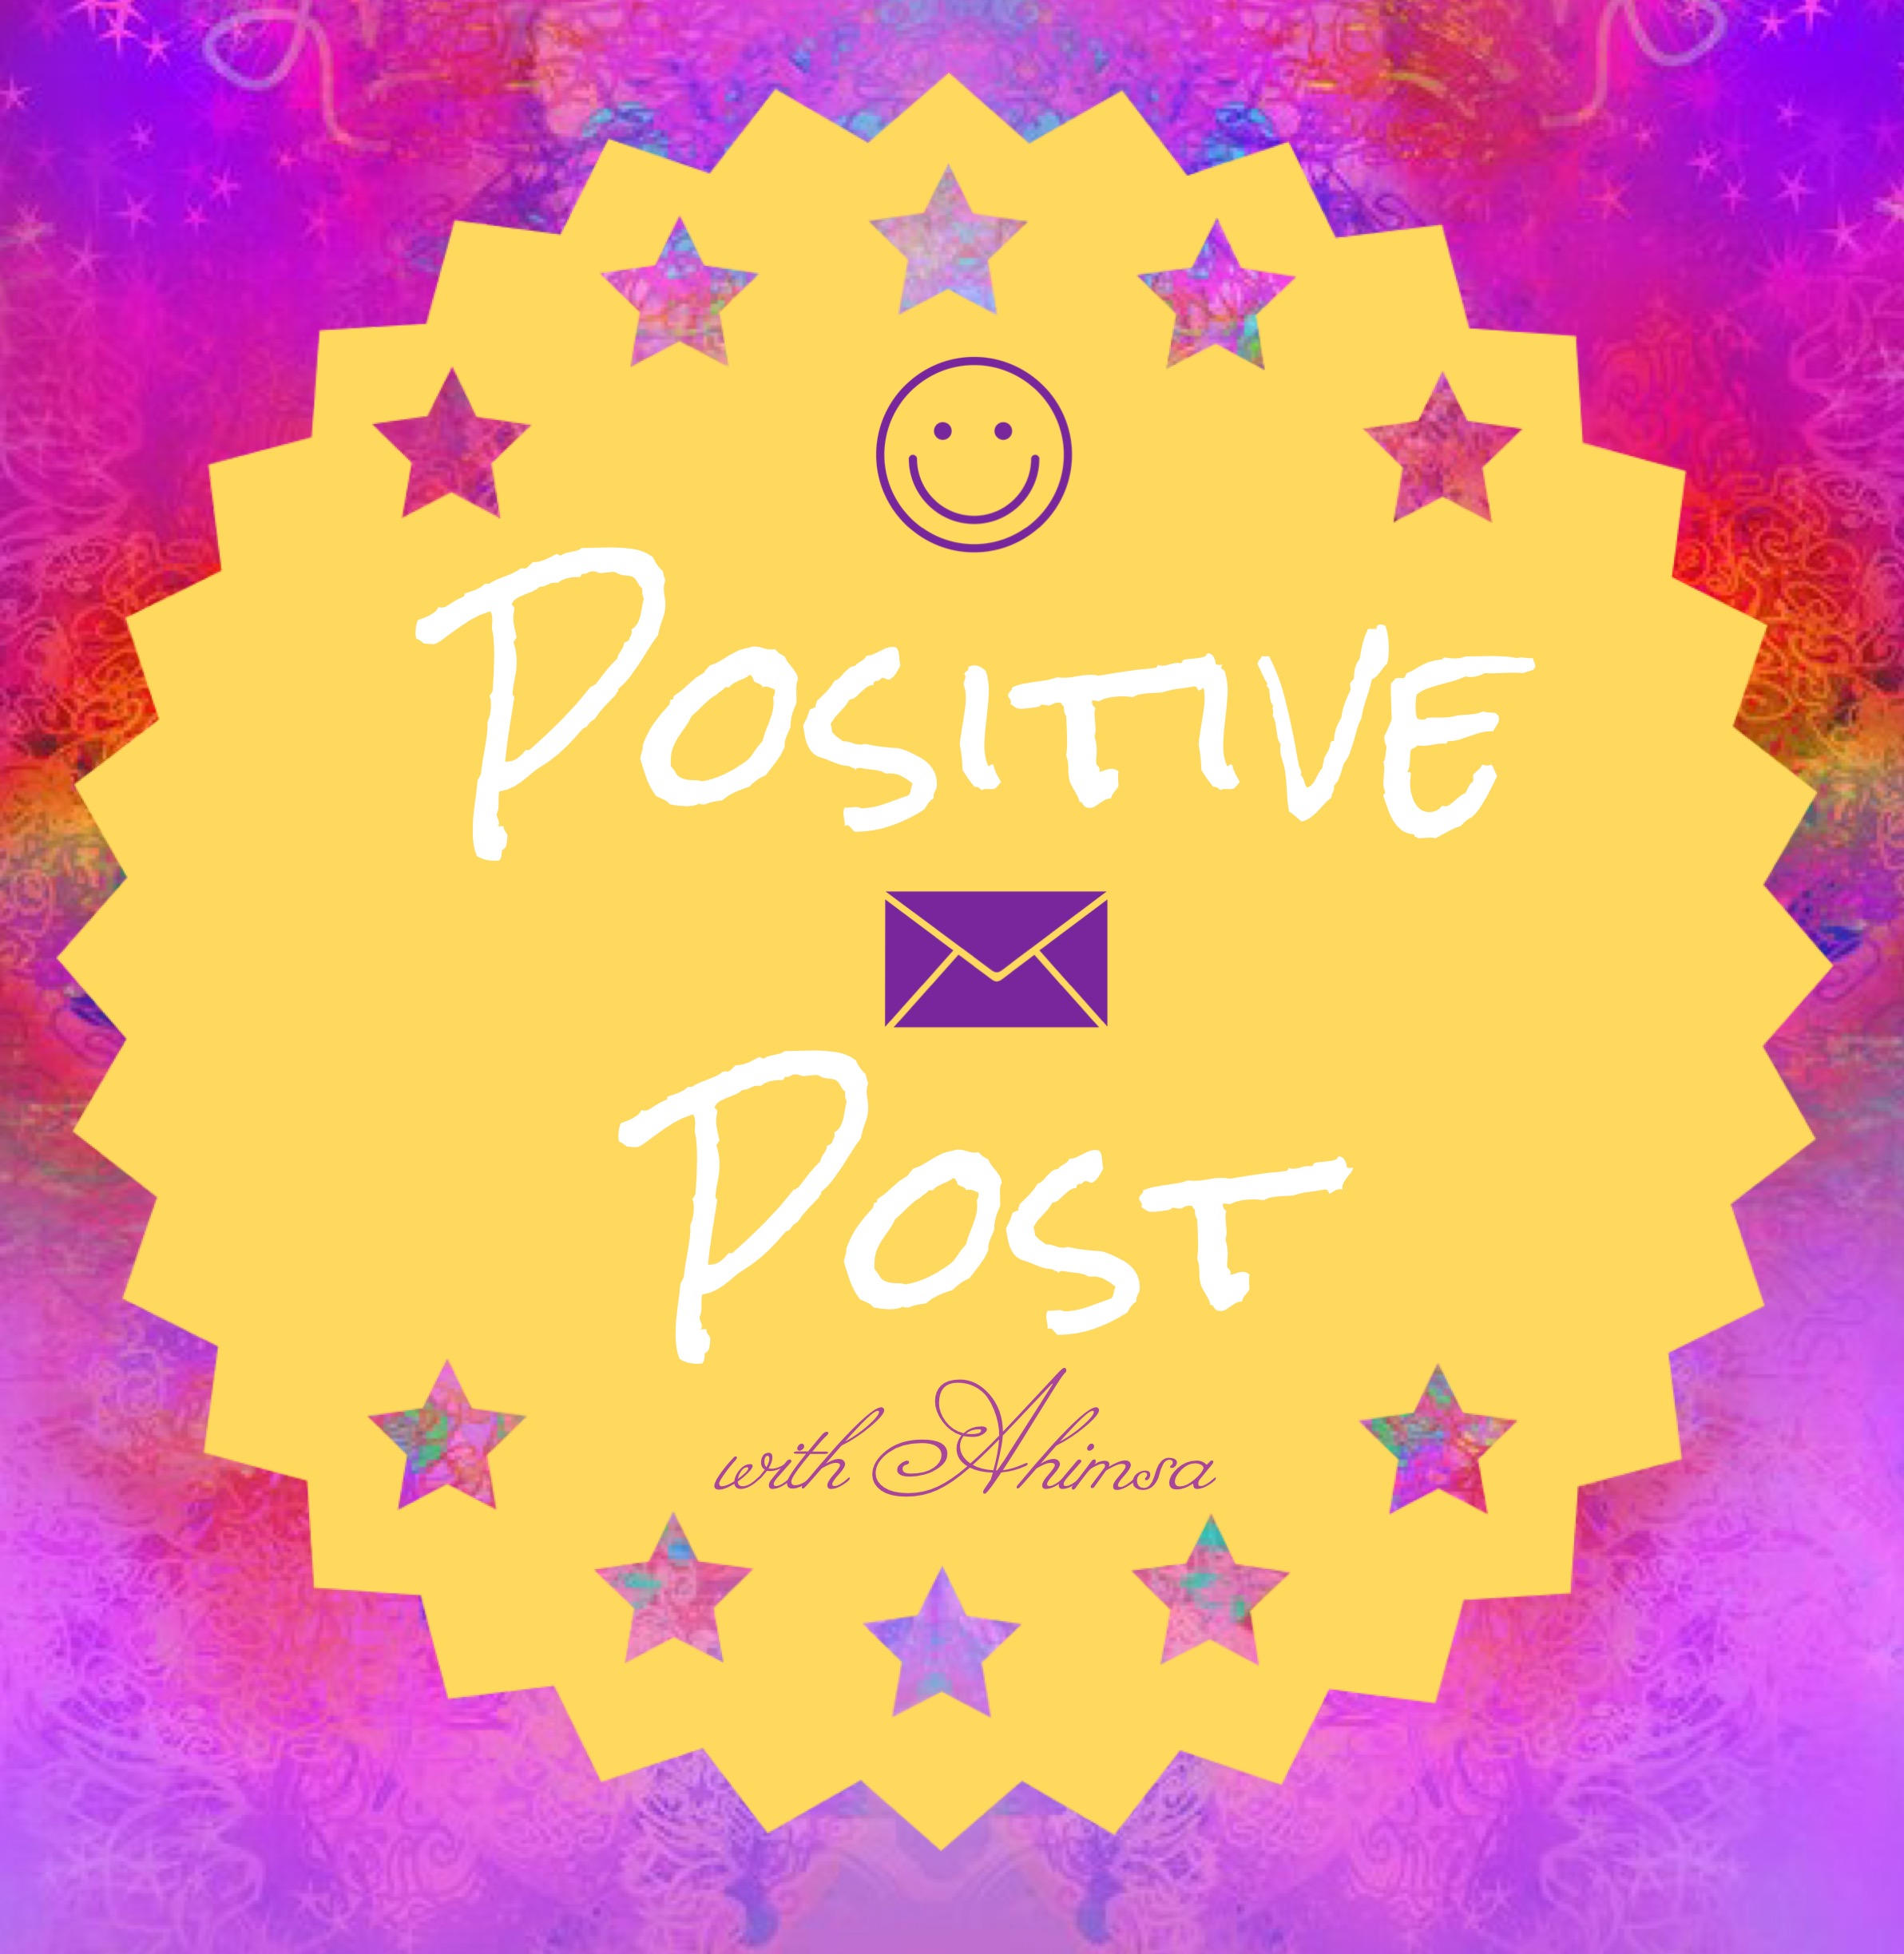 Pay It Forward Through Positive Post